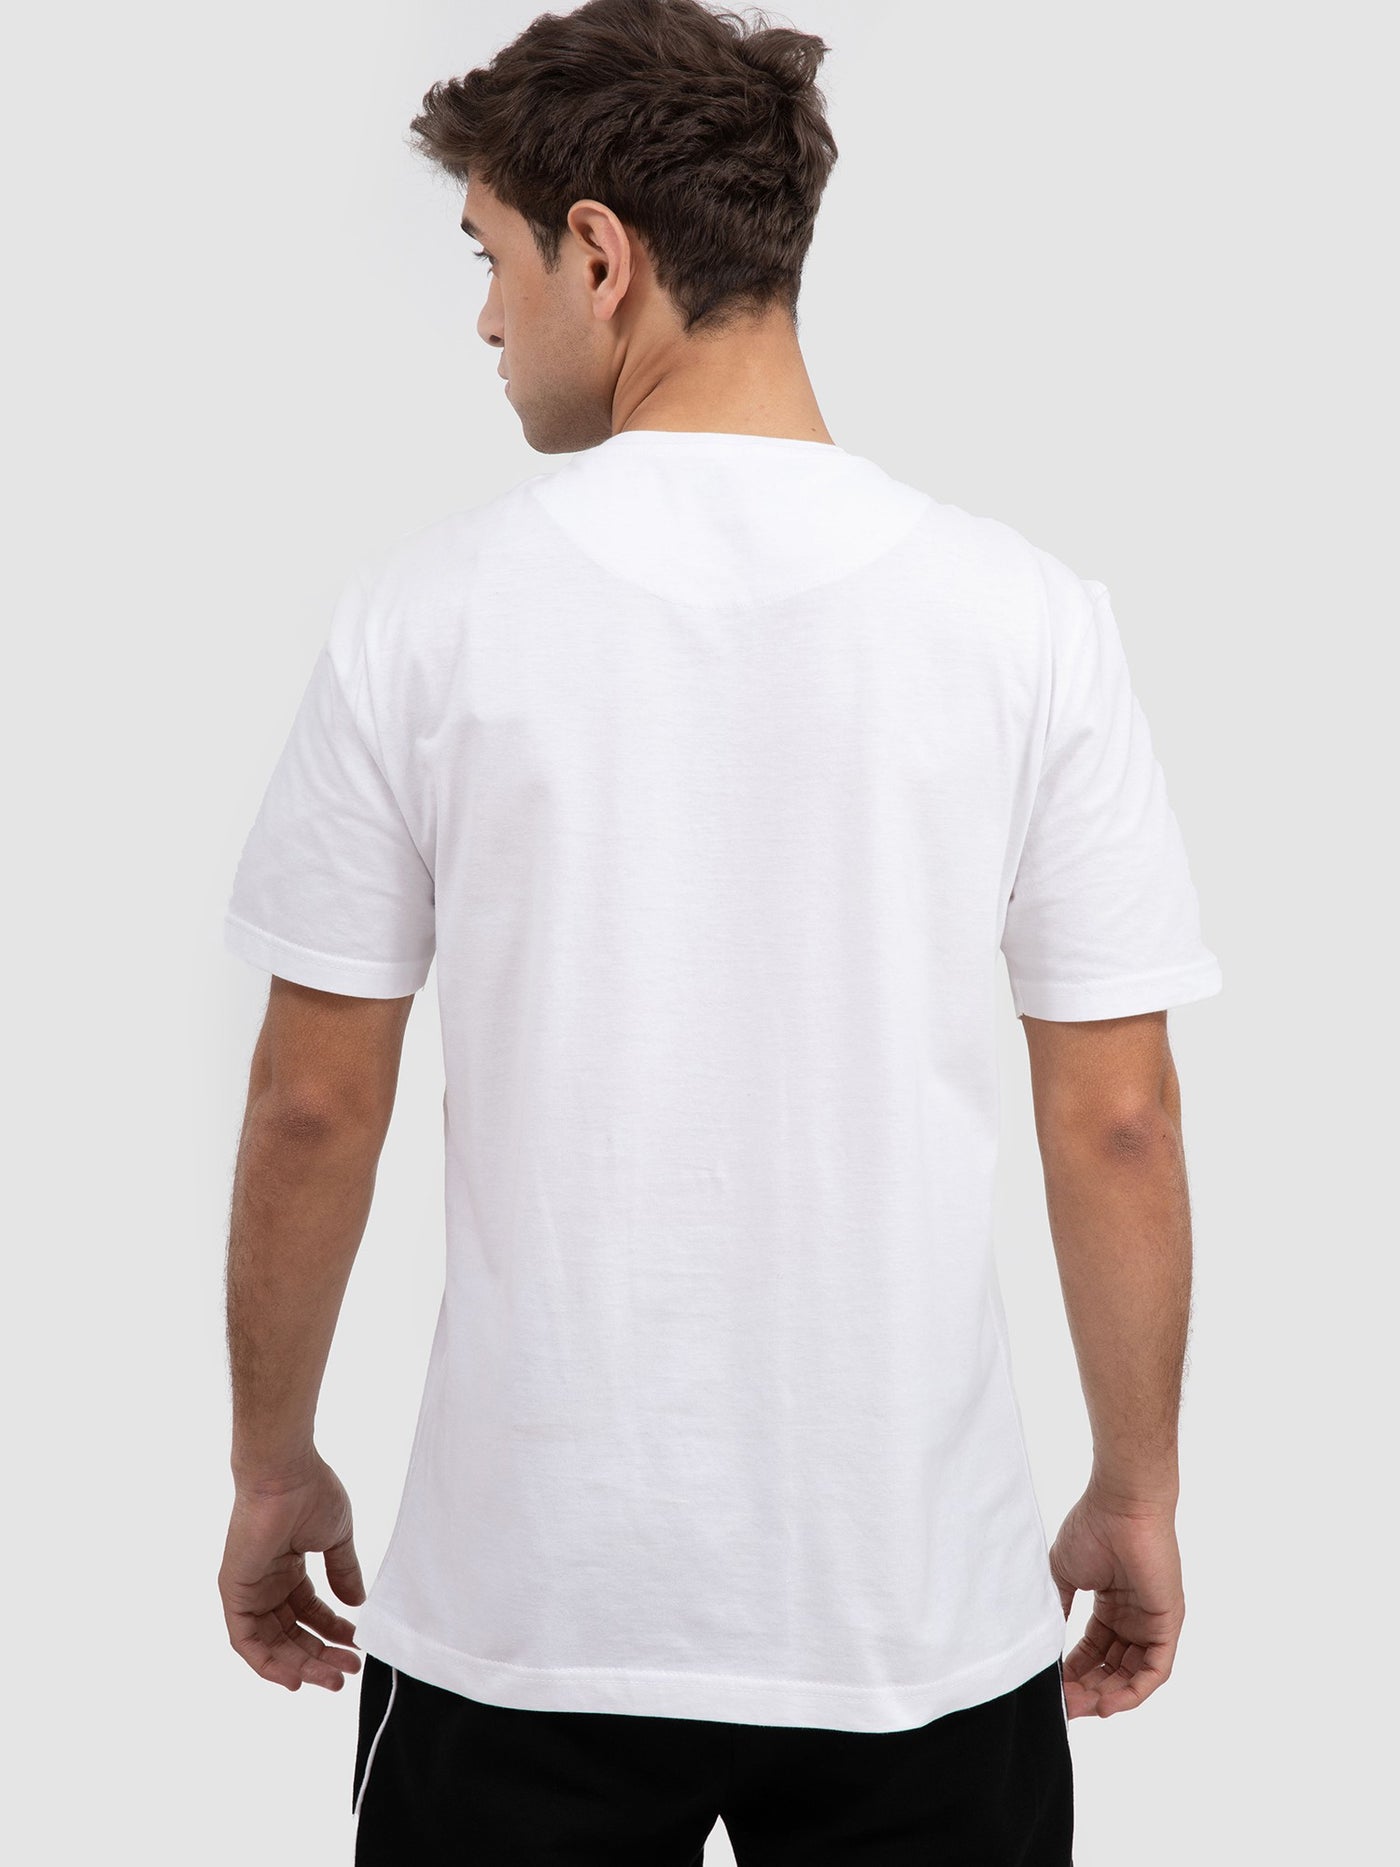 Premoda Mens Boxing Front Print T-Shirt